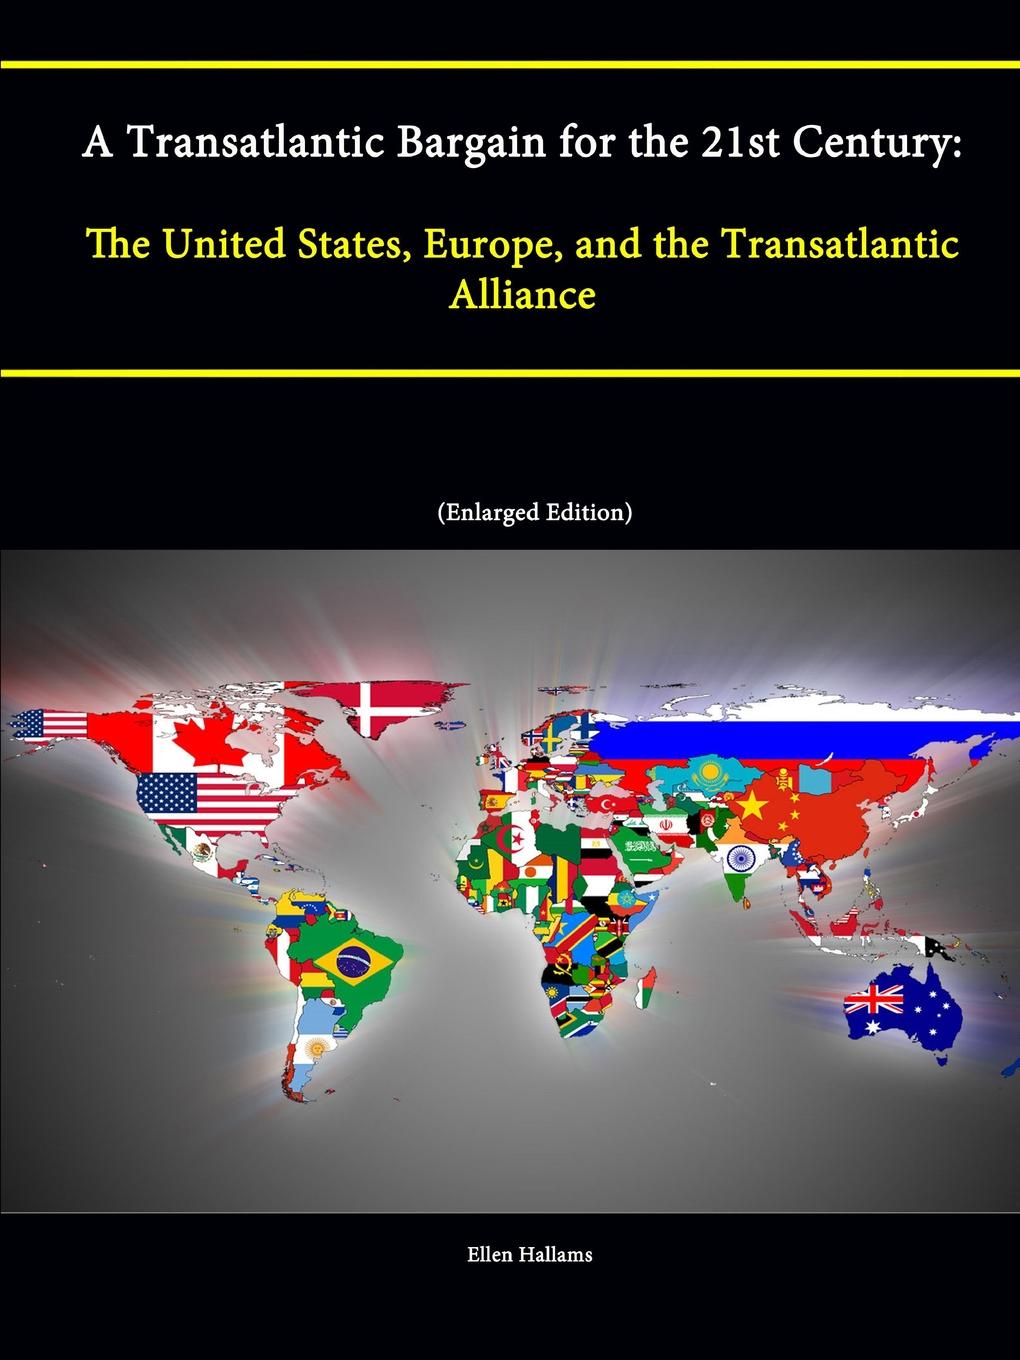 A Transatlantic Bargain for the 21st Century. The United States, Europe, and the Transatlantic Alliance